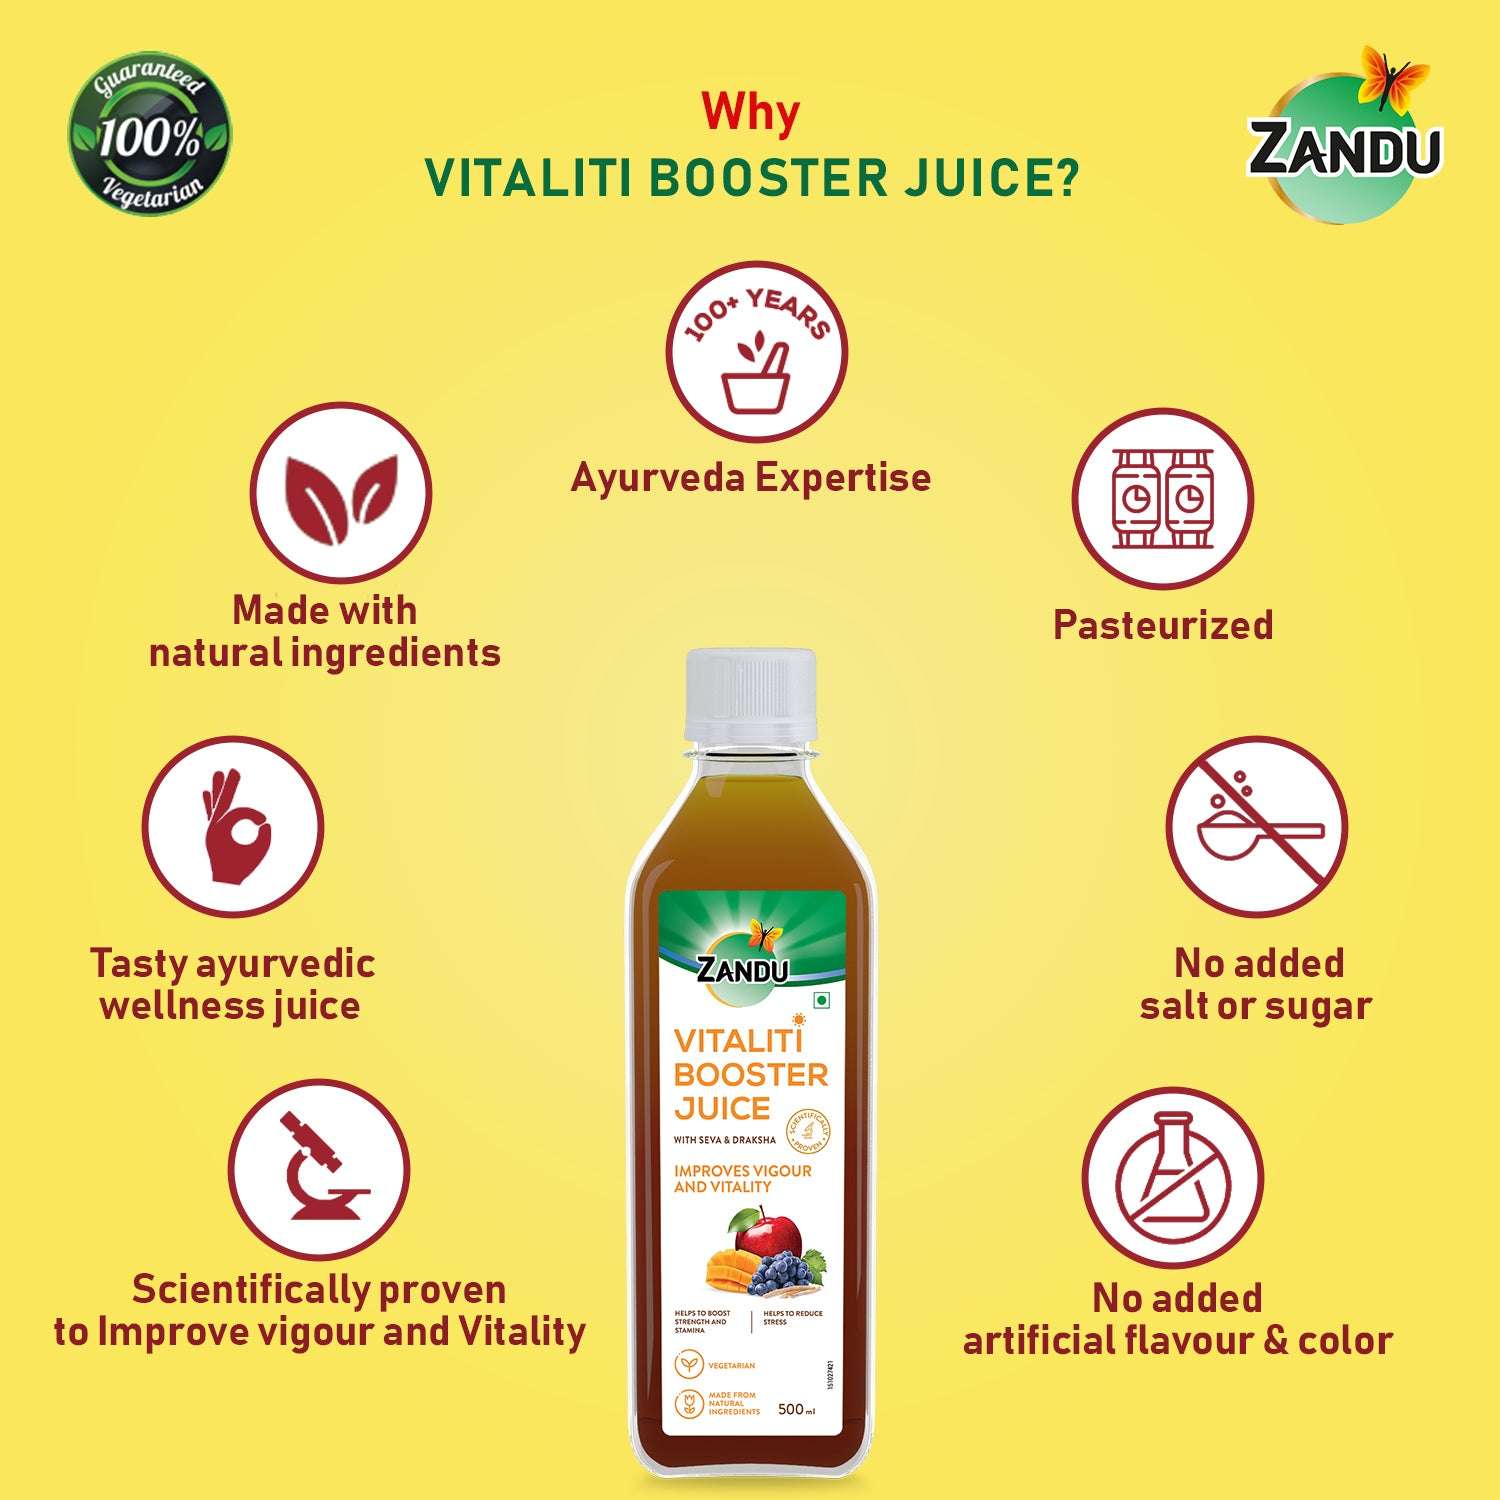 Why Choose Zandu Vitality booster Juice